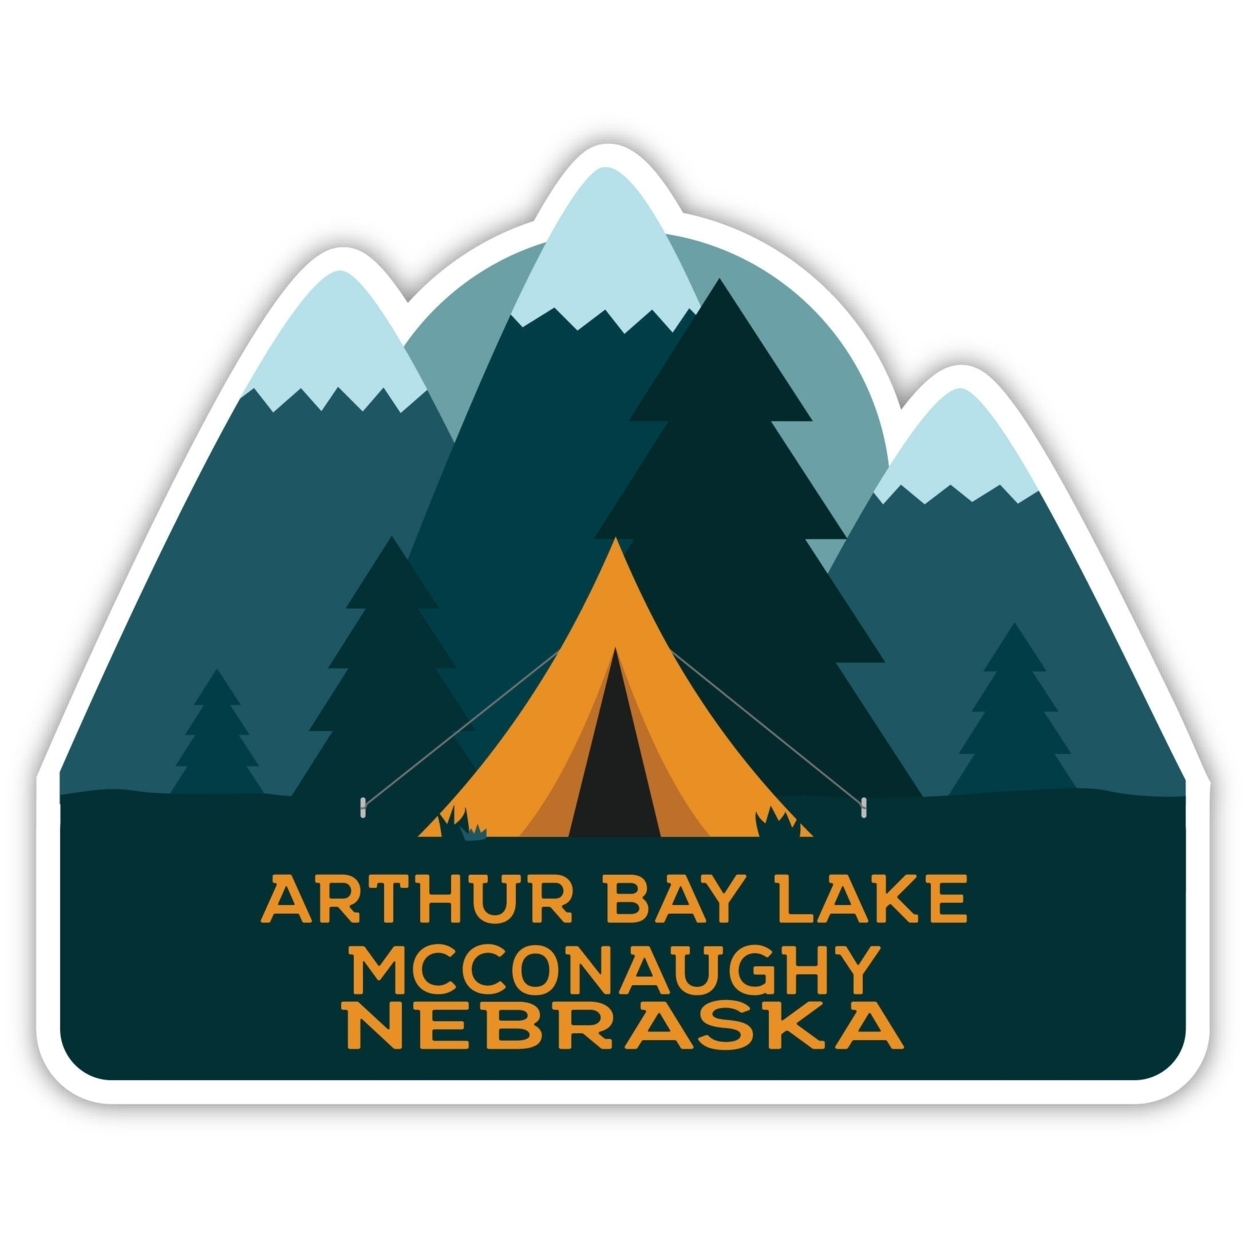 Arthur Bay Lake Mcconaughy Nebraska Souvenir Decorative Stickers (Choose Theme And Size) - Single Unit, 2-Inch, Tent